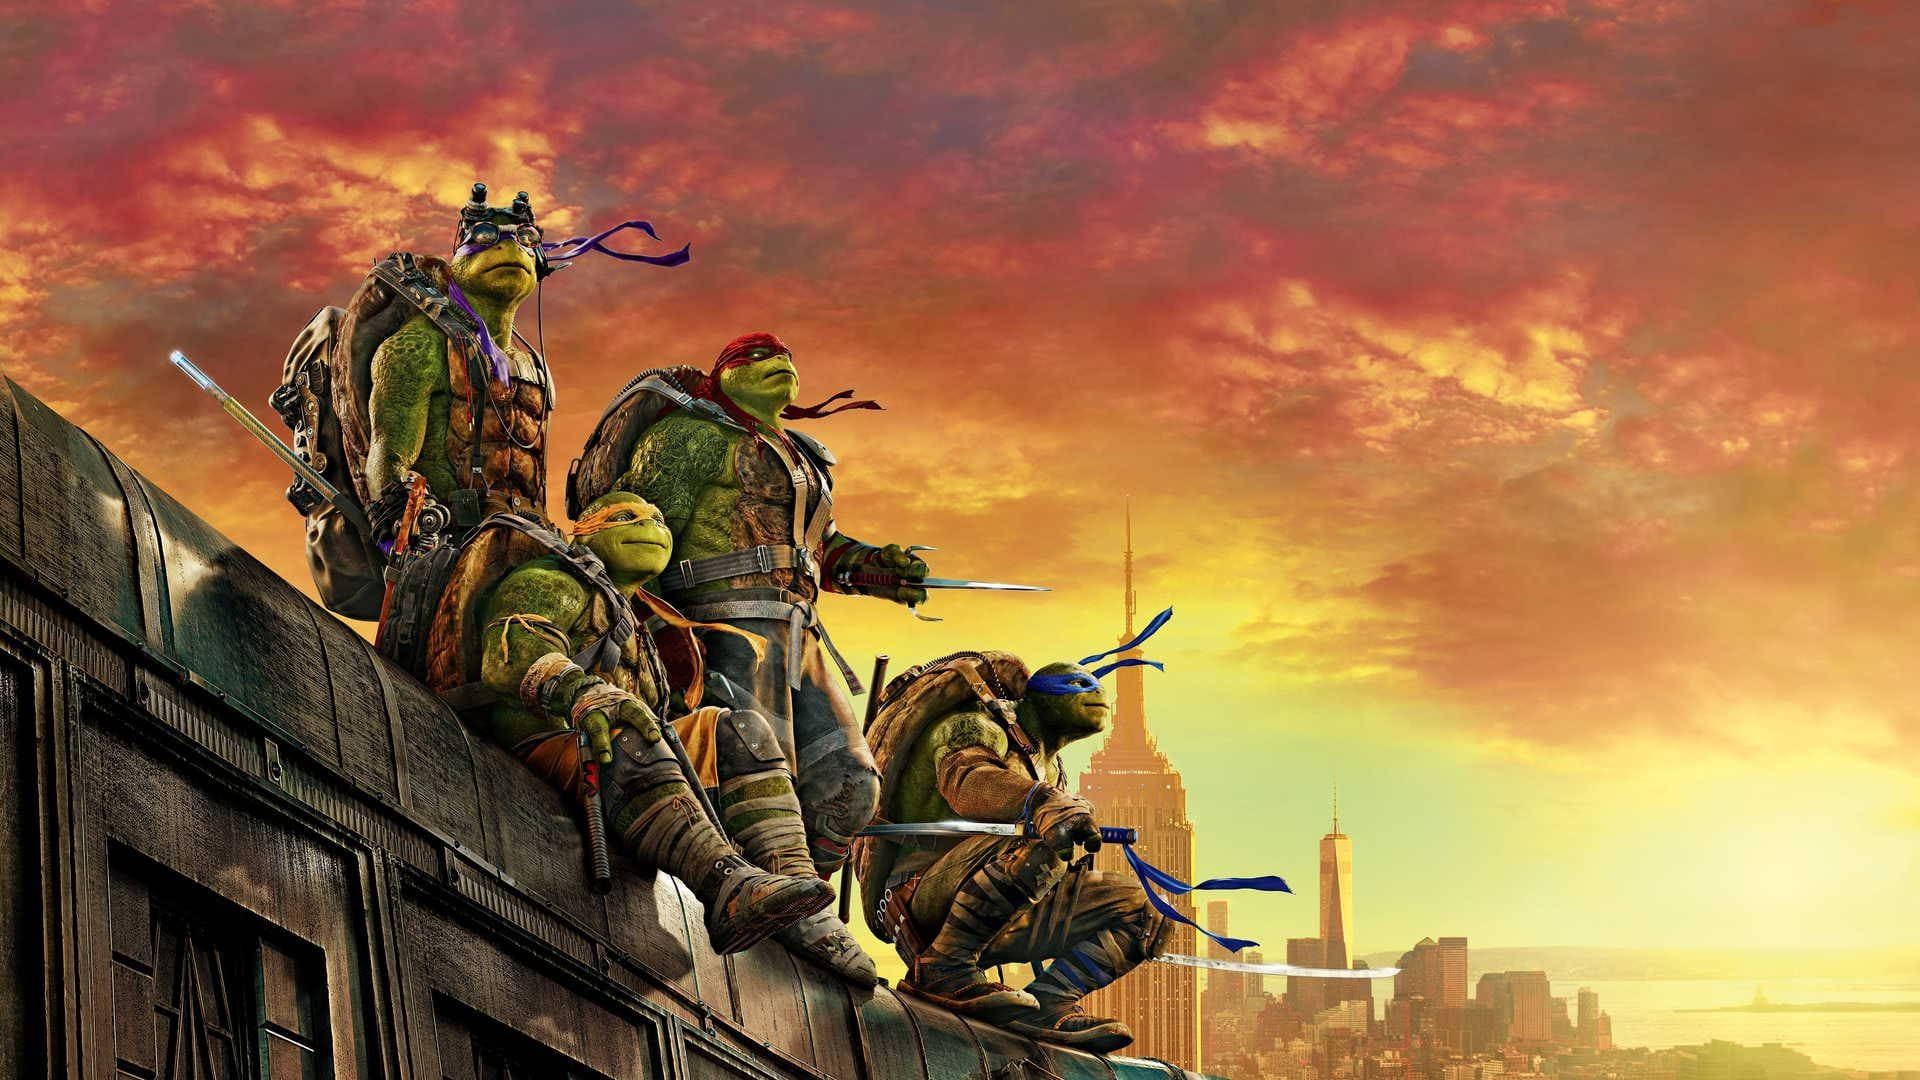 Ninja Turtle On Rooftop Of Building Wallpaper